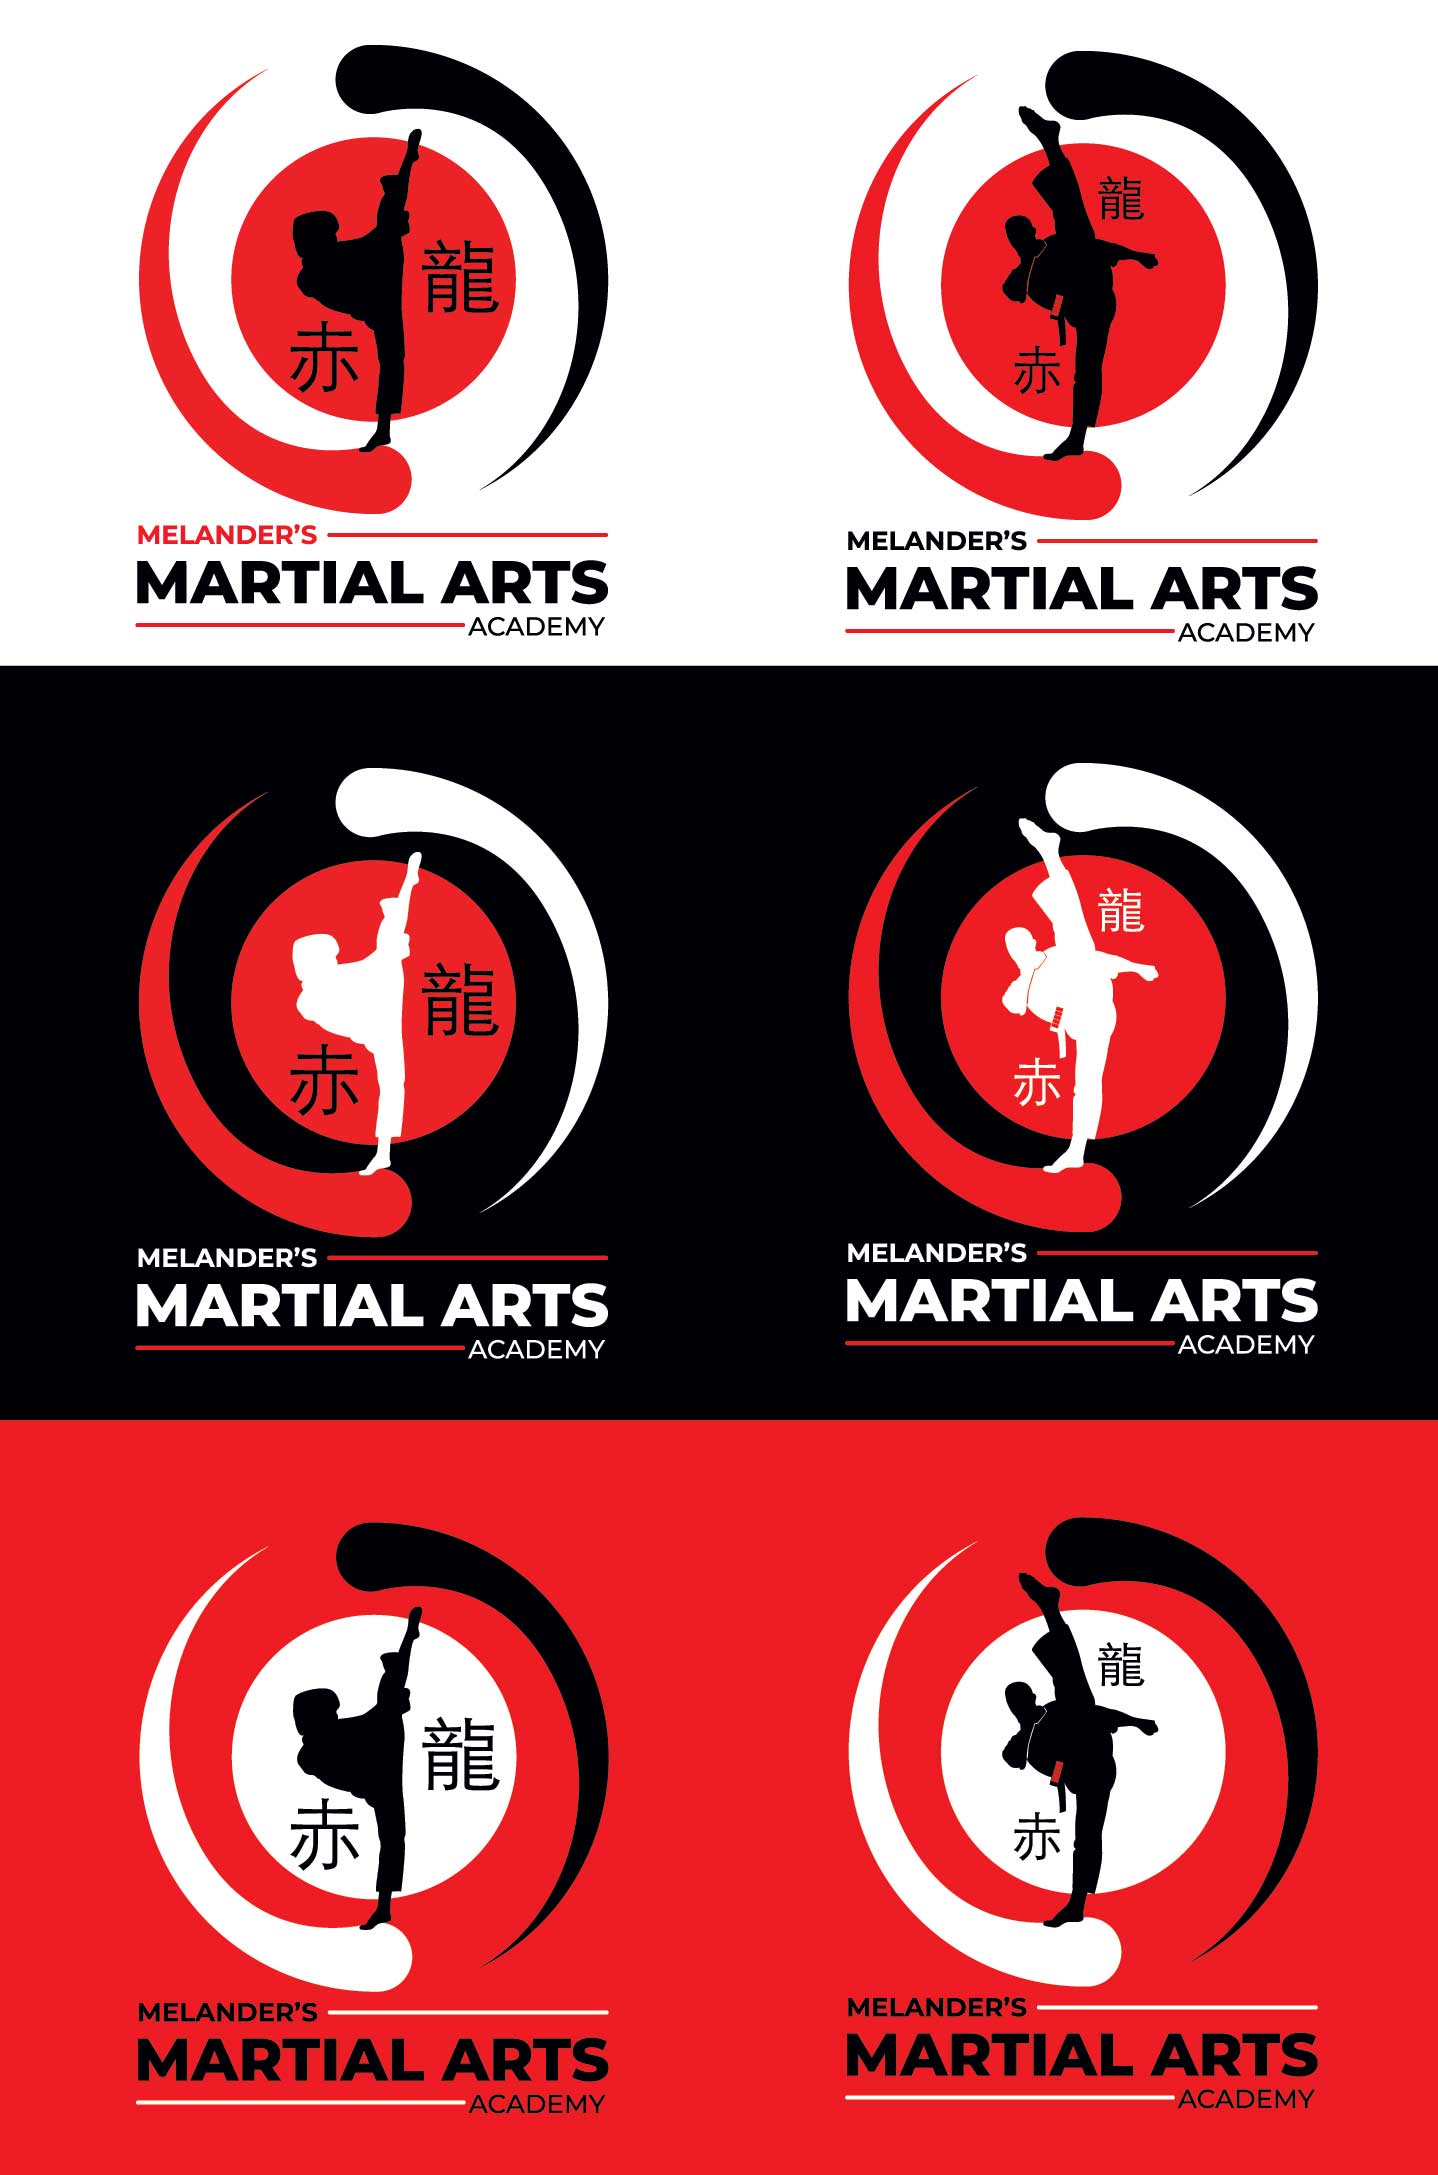 Photo of logo design variations created for Melanders Martial Arts Academy in Glens Falls, New York.